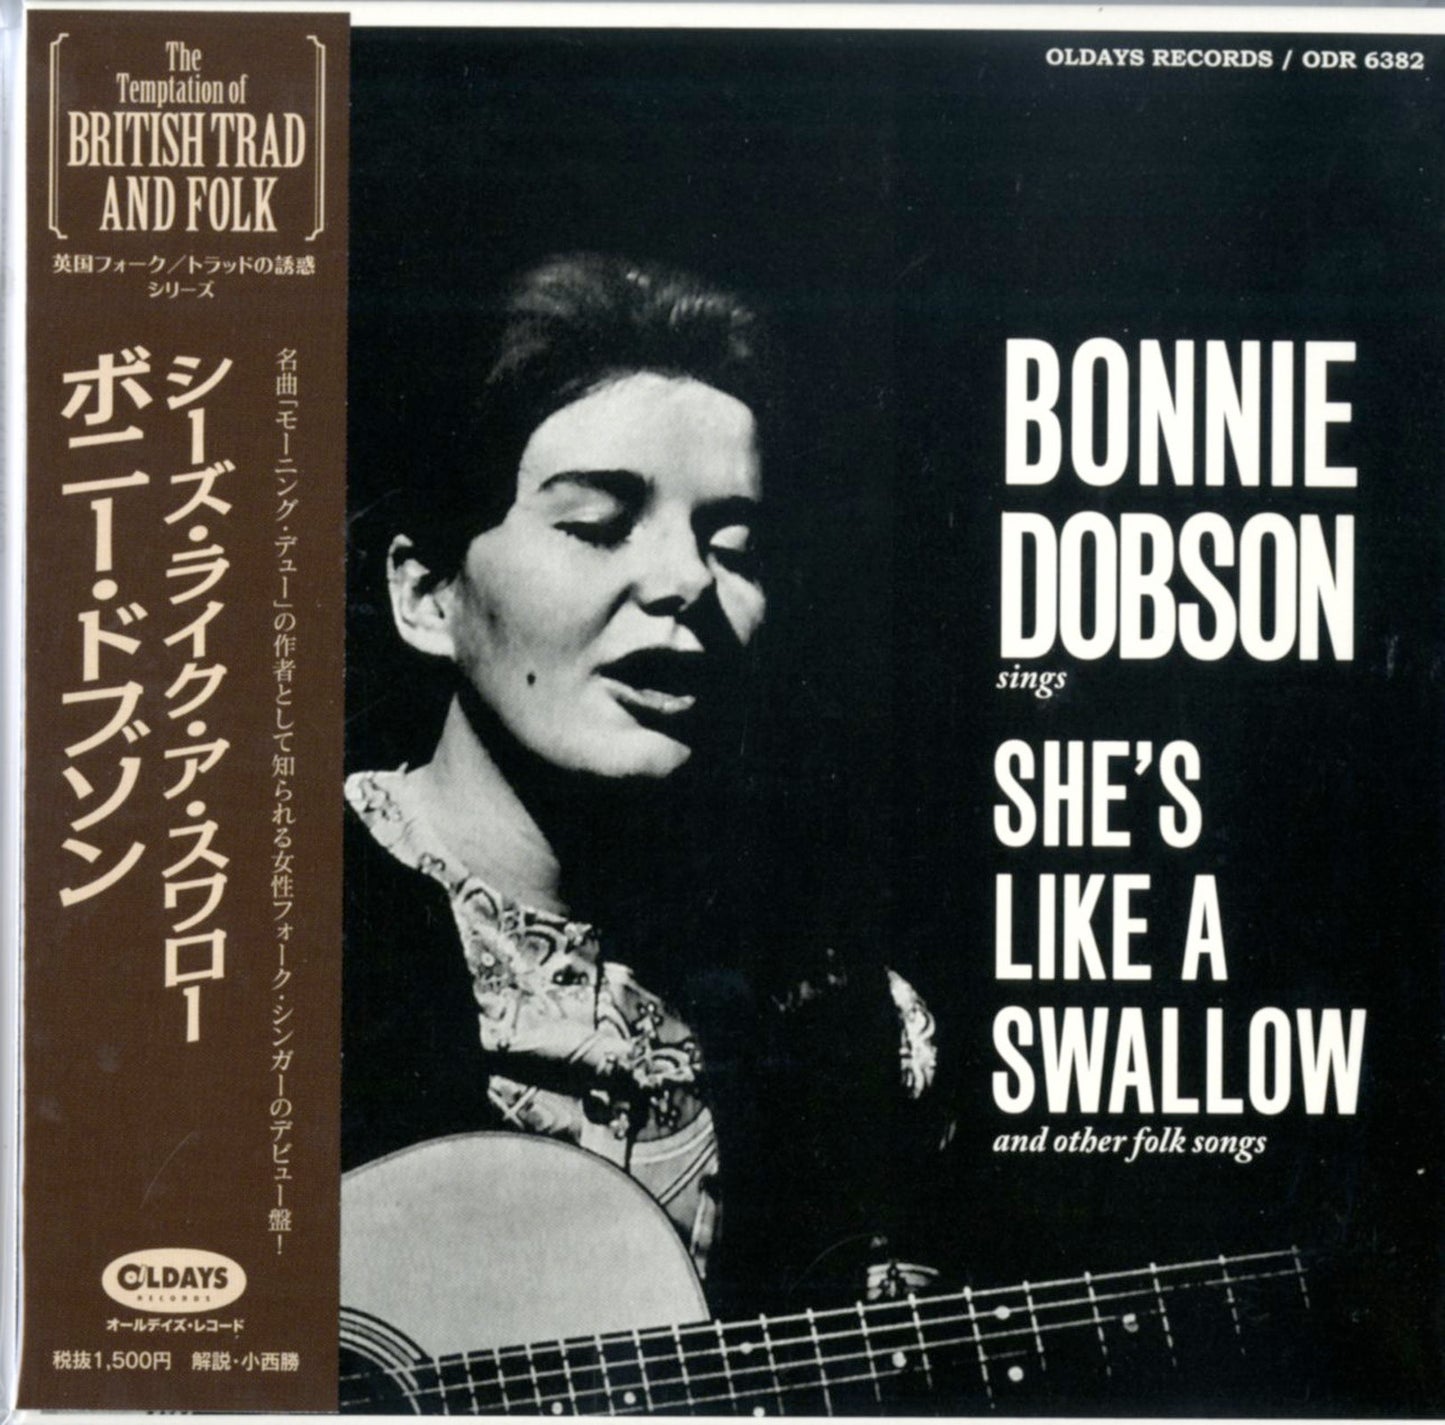 Bonnie Dobson - She Like A Swallow - Japan  Mini LP CD